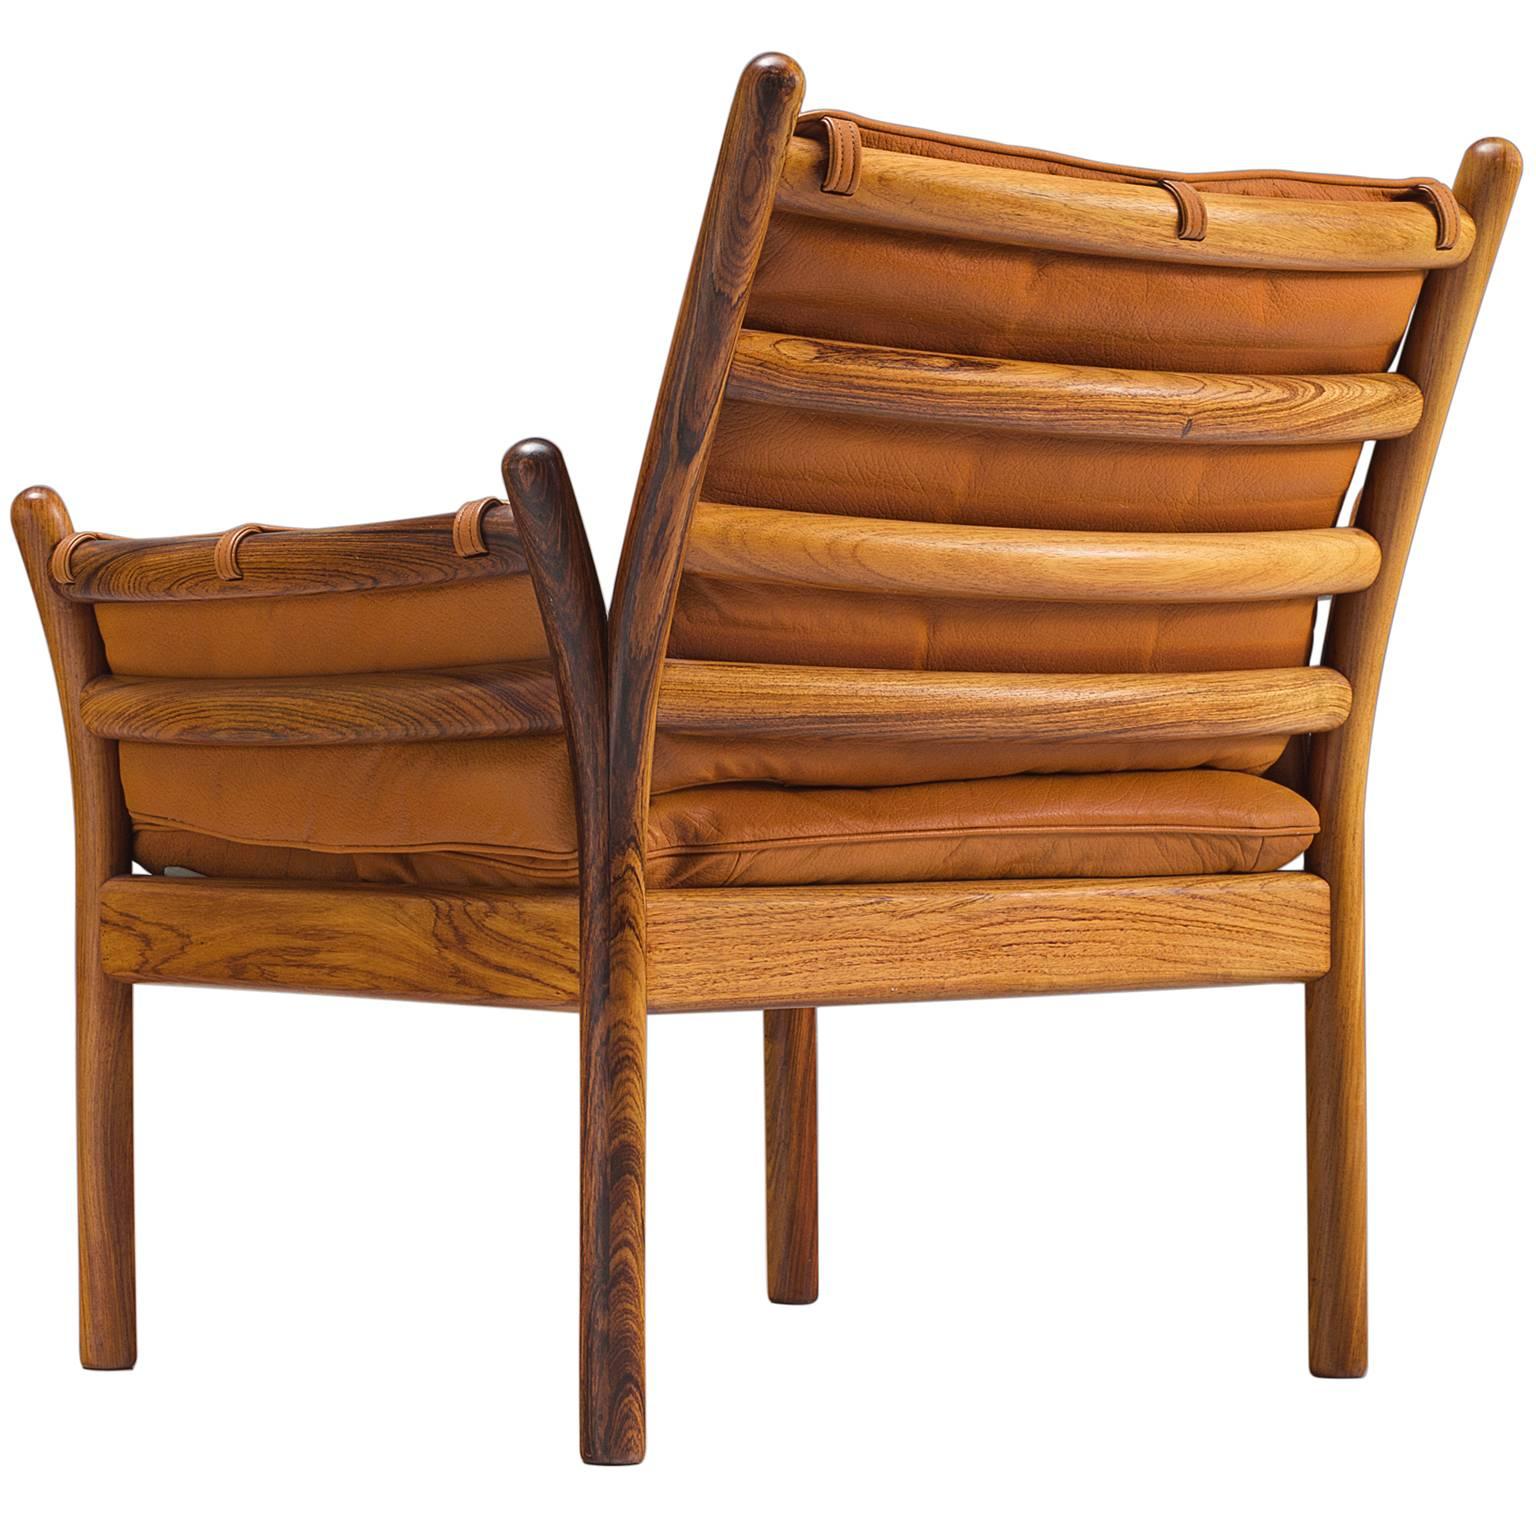 Illum Wikkelsø 'Genius' Chair in Rosewood and Cognac Leather